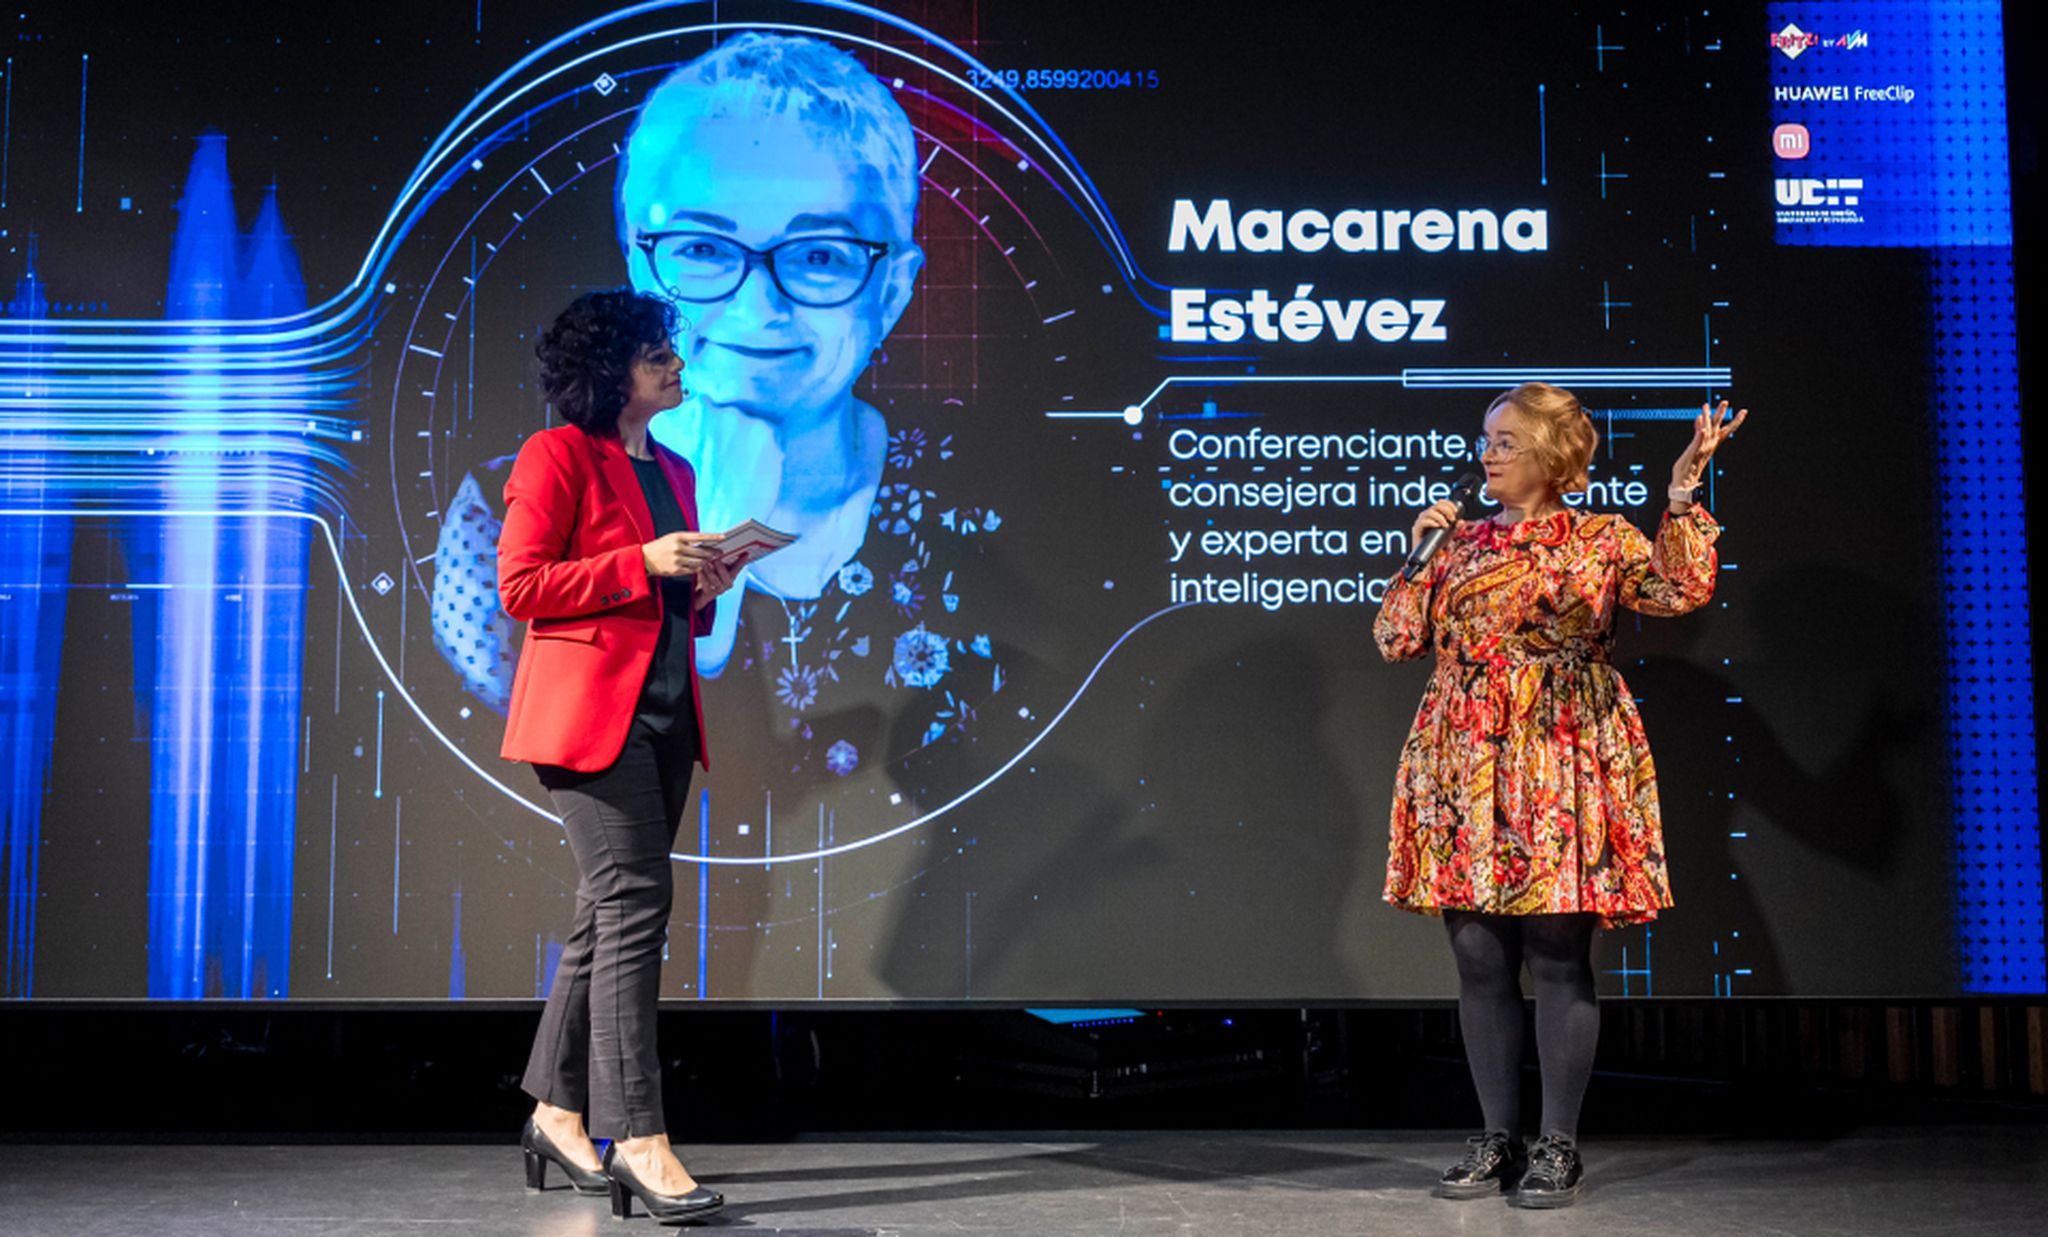 De izquierda a derecha: Yovanna Blanco, directora editorial de Axel Springer España, conversa durante el evento con Macarena Estevez, experta en Inteligencia Artificial.